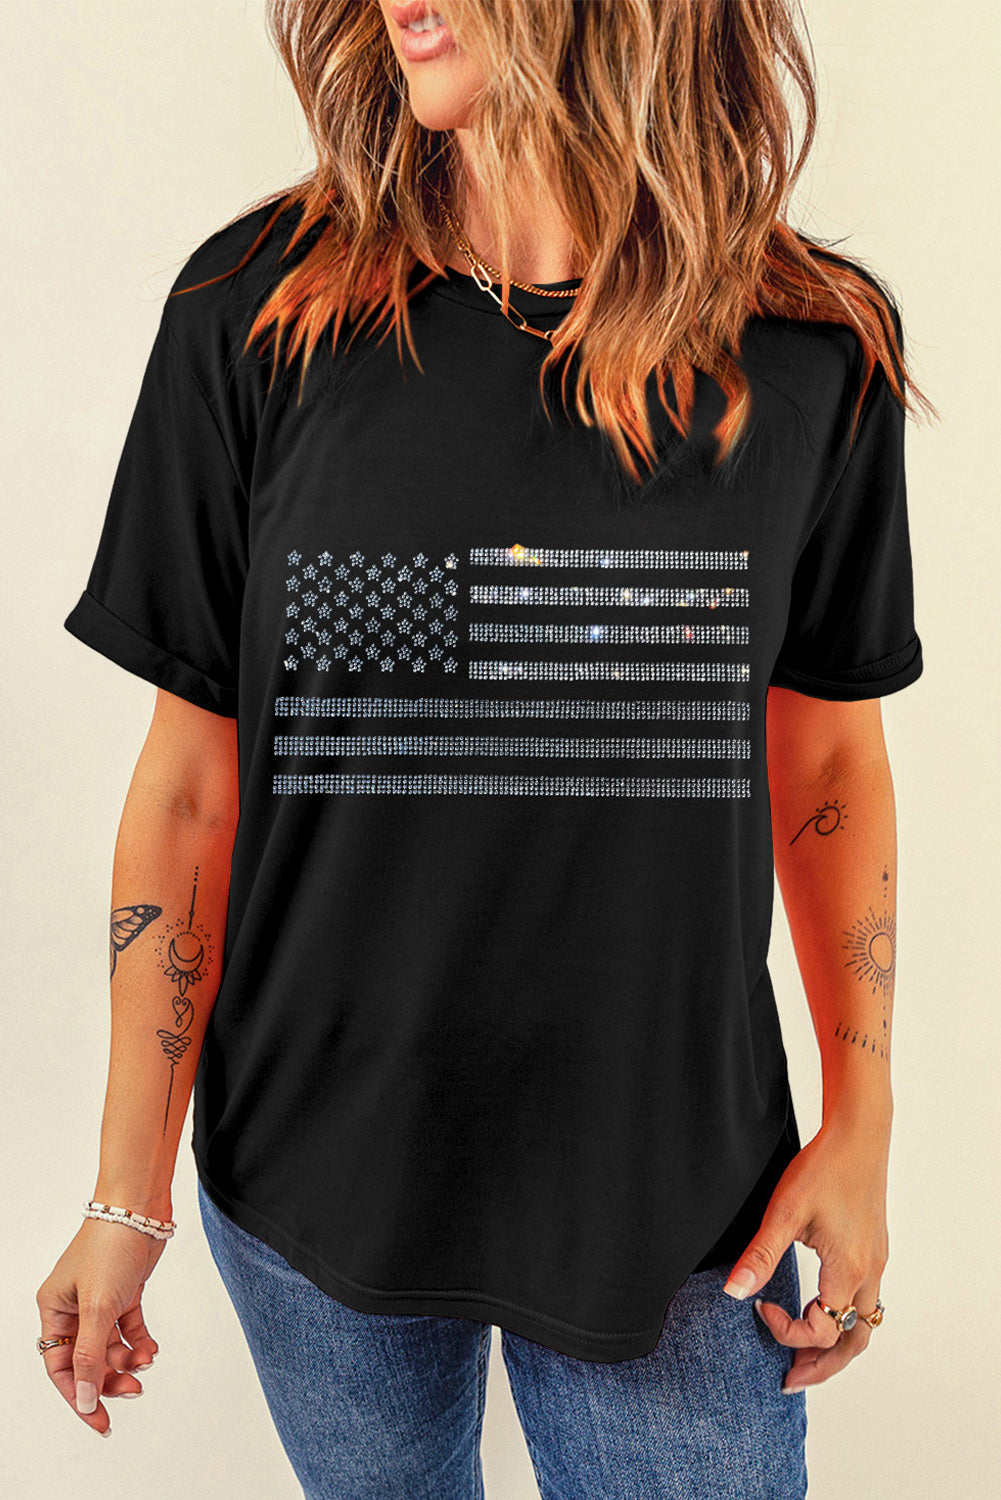 Rhinestone USA Flag Round Neck Short Sleeve T-Shirt Sunset and Swim Black S 